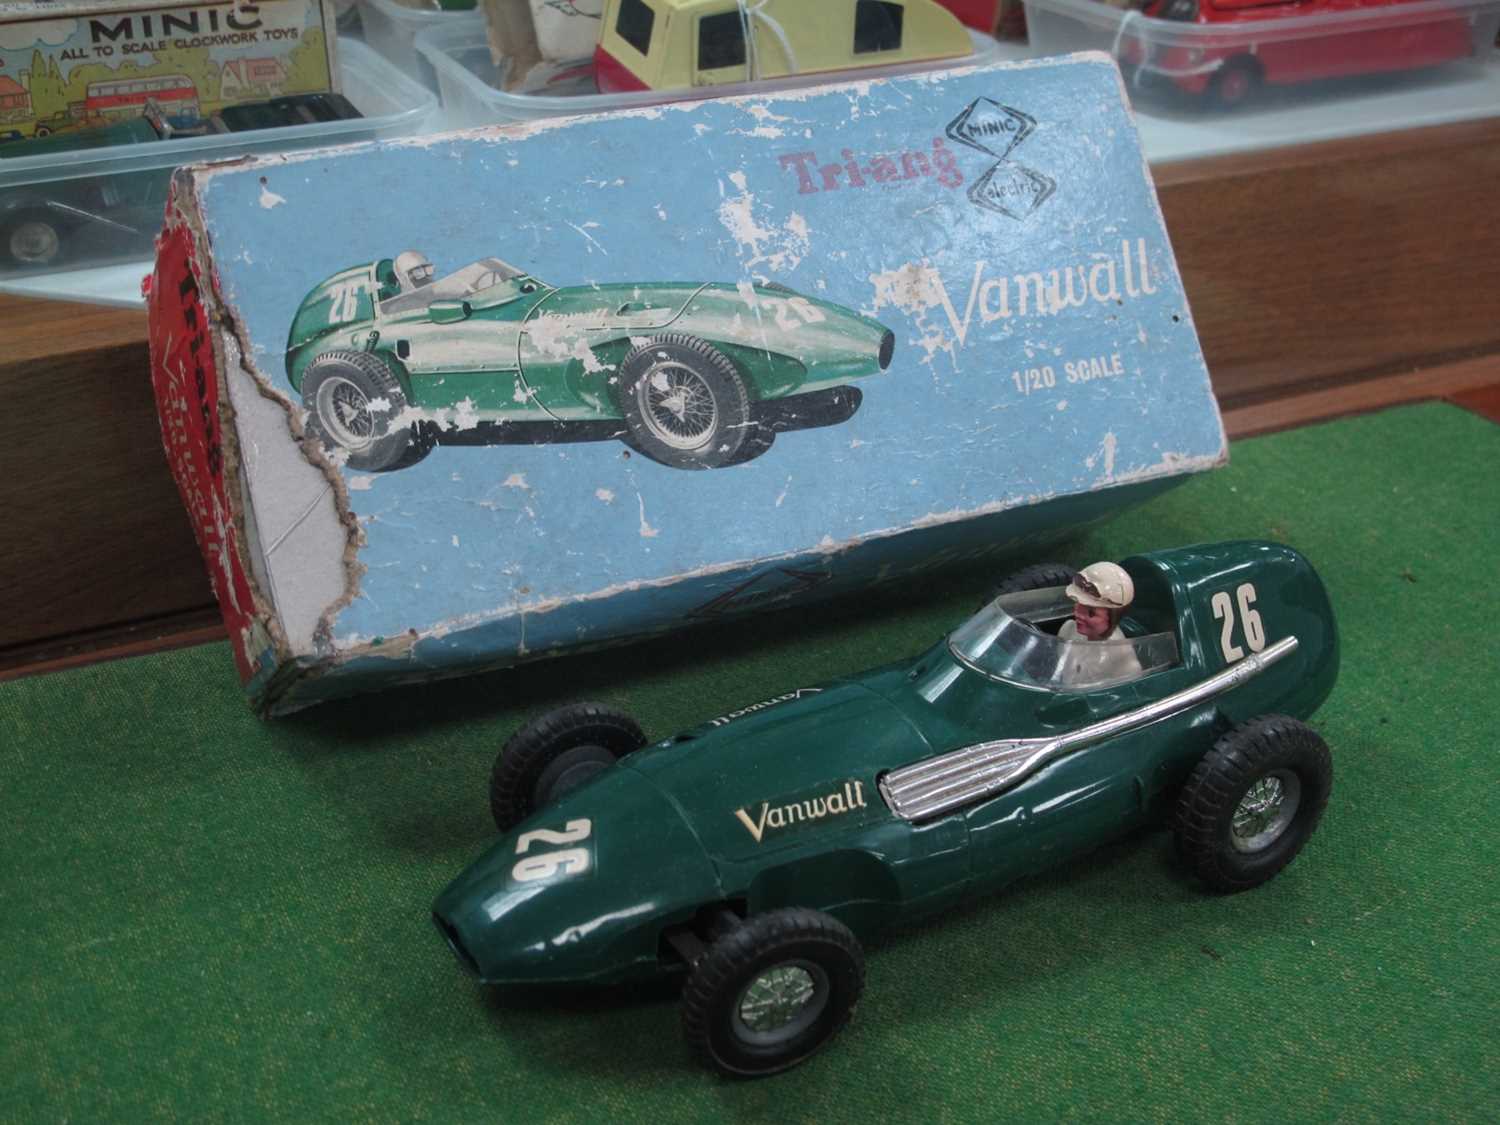 An Original Tri-ang 1:20 Scale Vanwall Racing Car, green, body appears unbroken, missing battery box